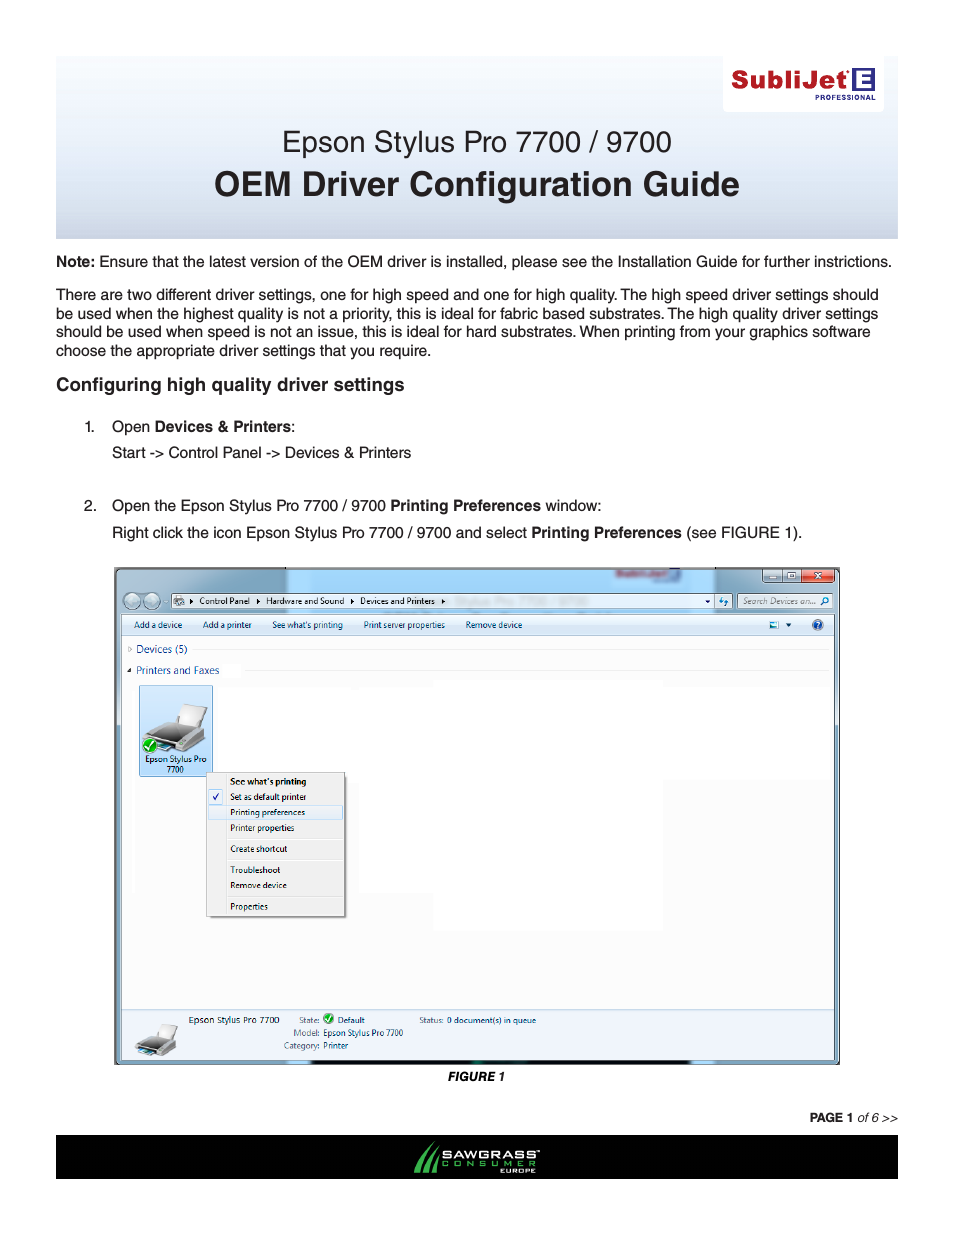 SubliJet E Epson Stylus Pro 7900 (Windows ICC Profile Setup): Driver Configuration Guide